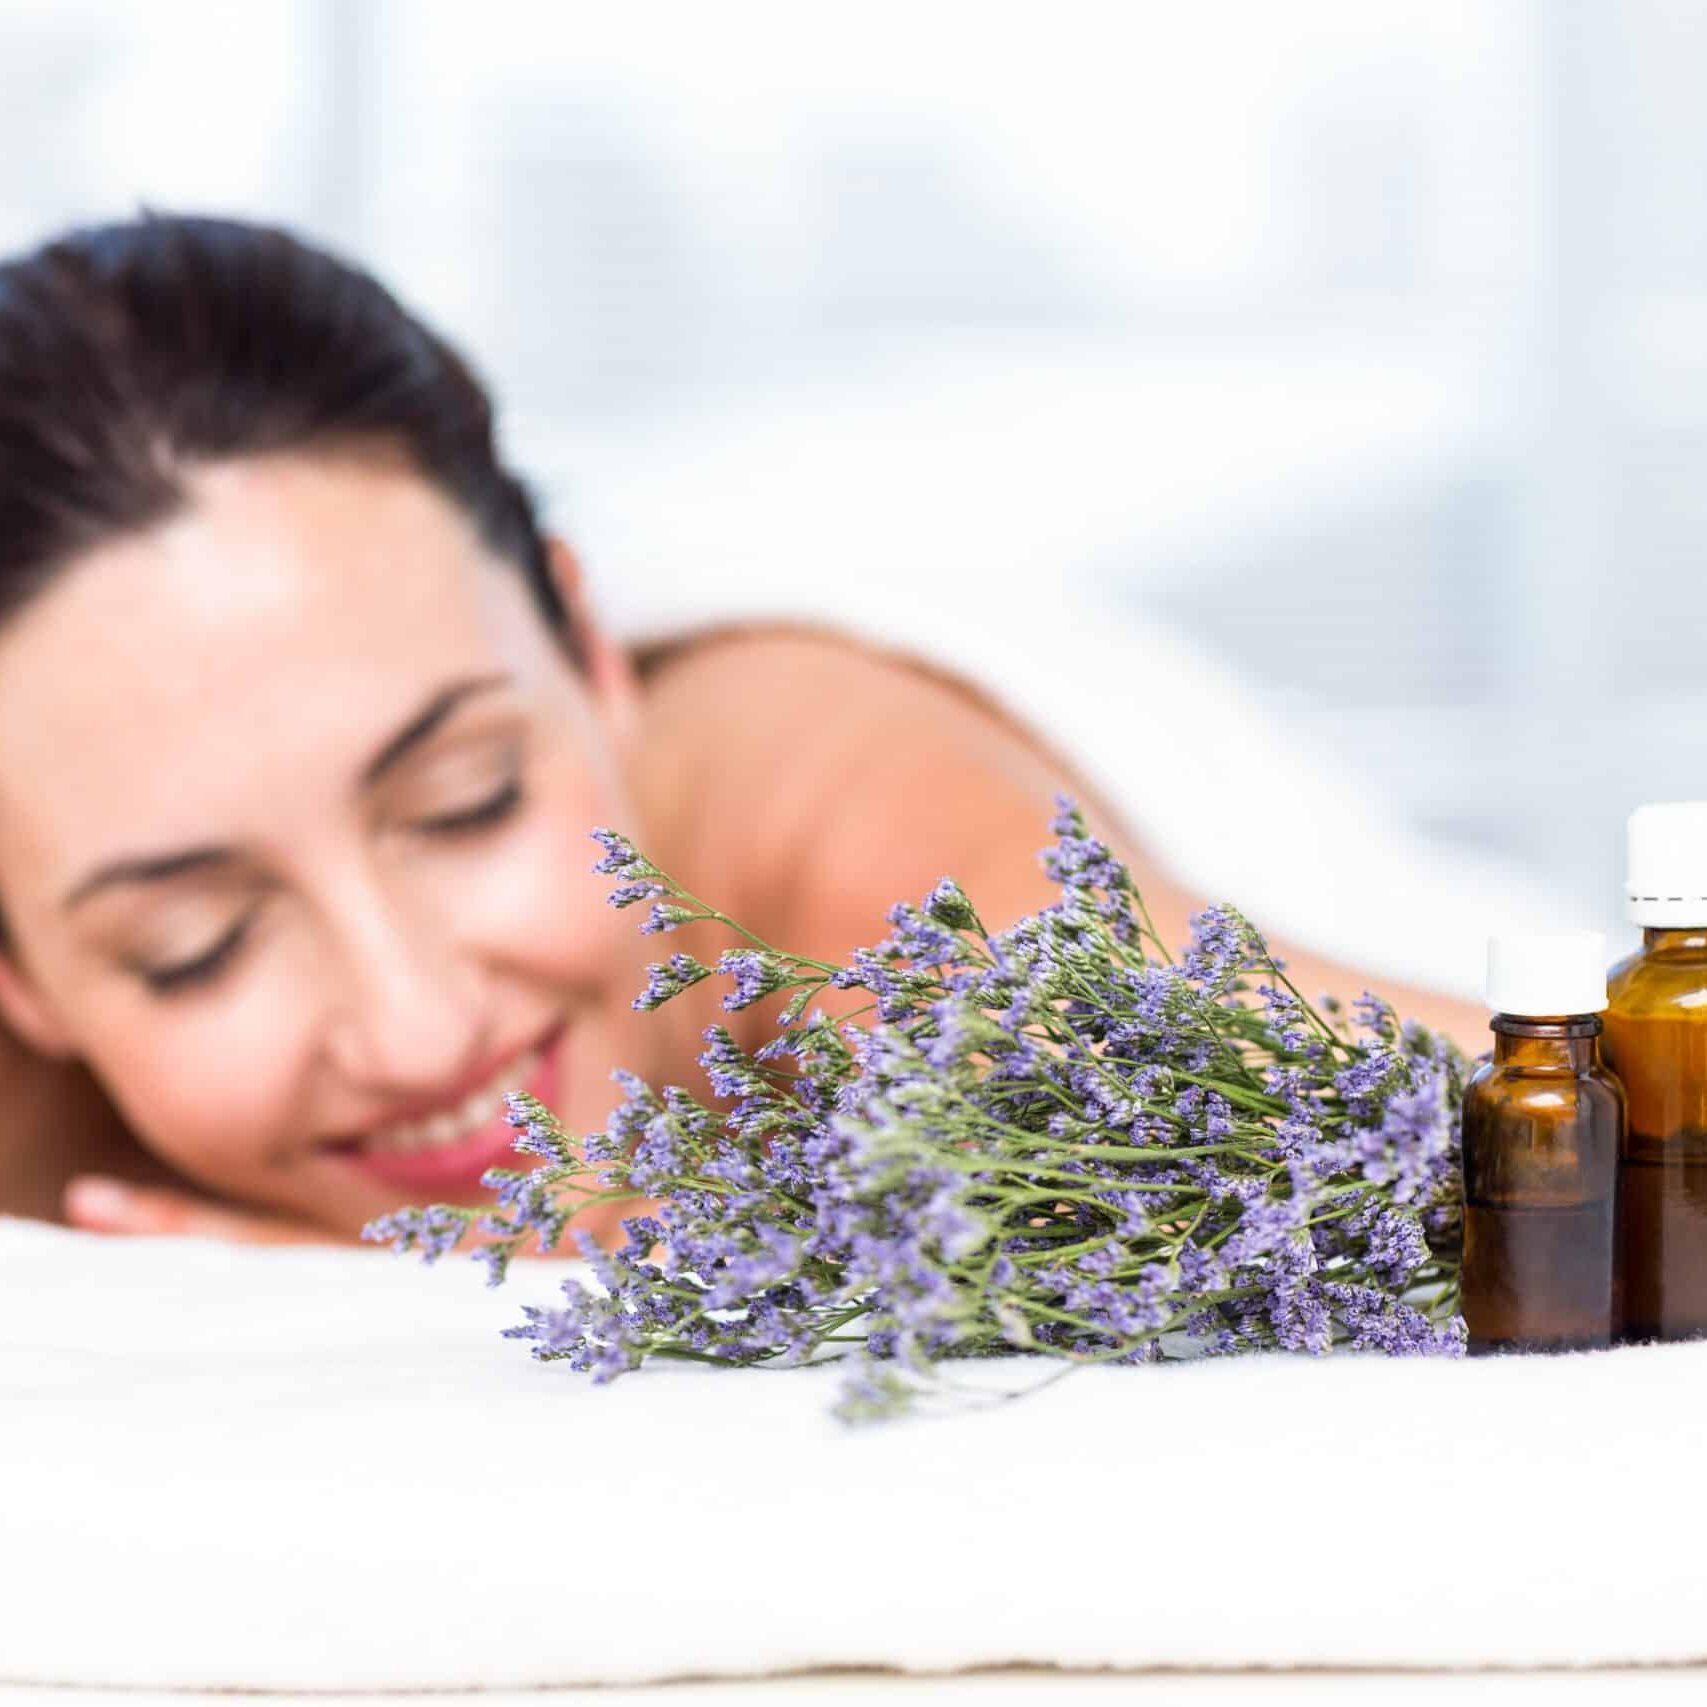 Aromatherapy Massage Course